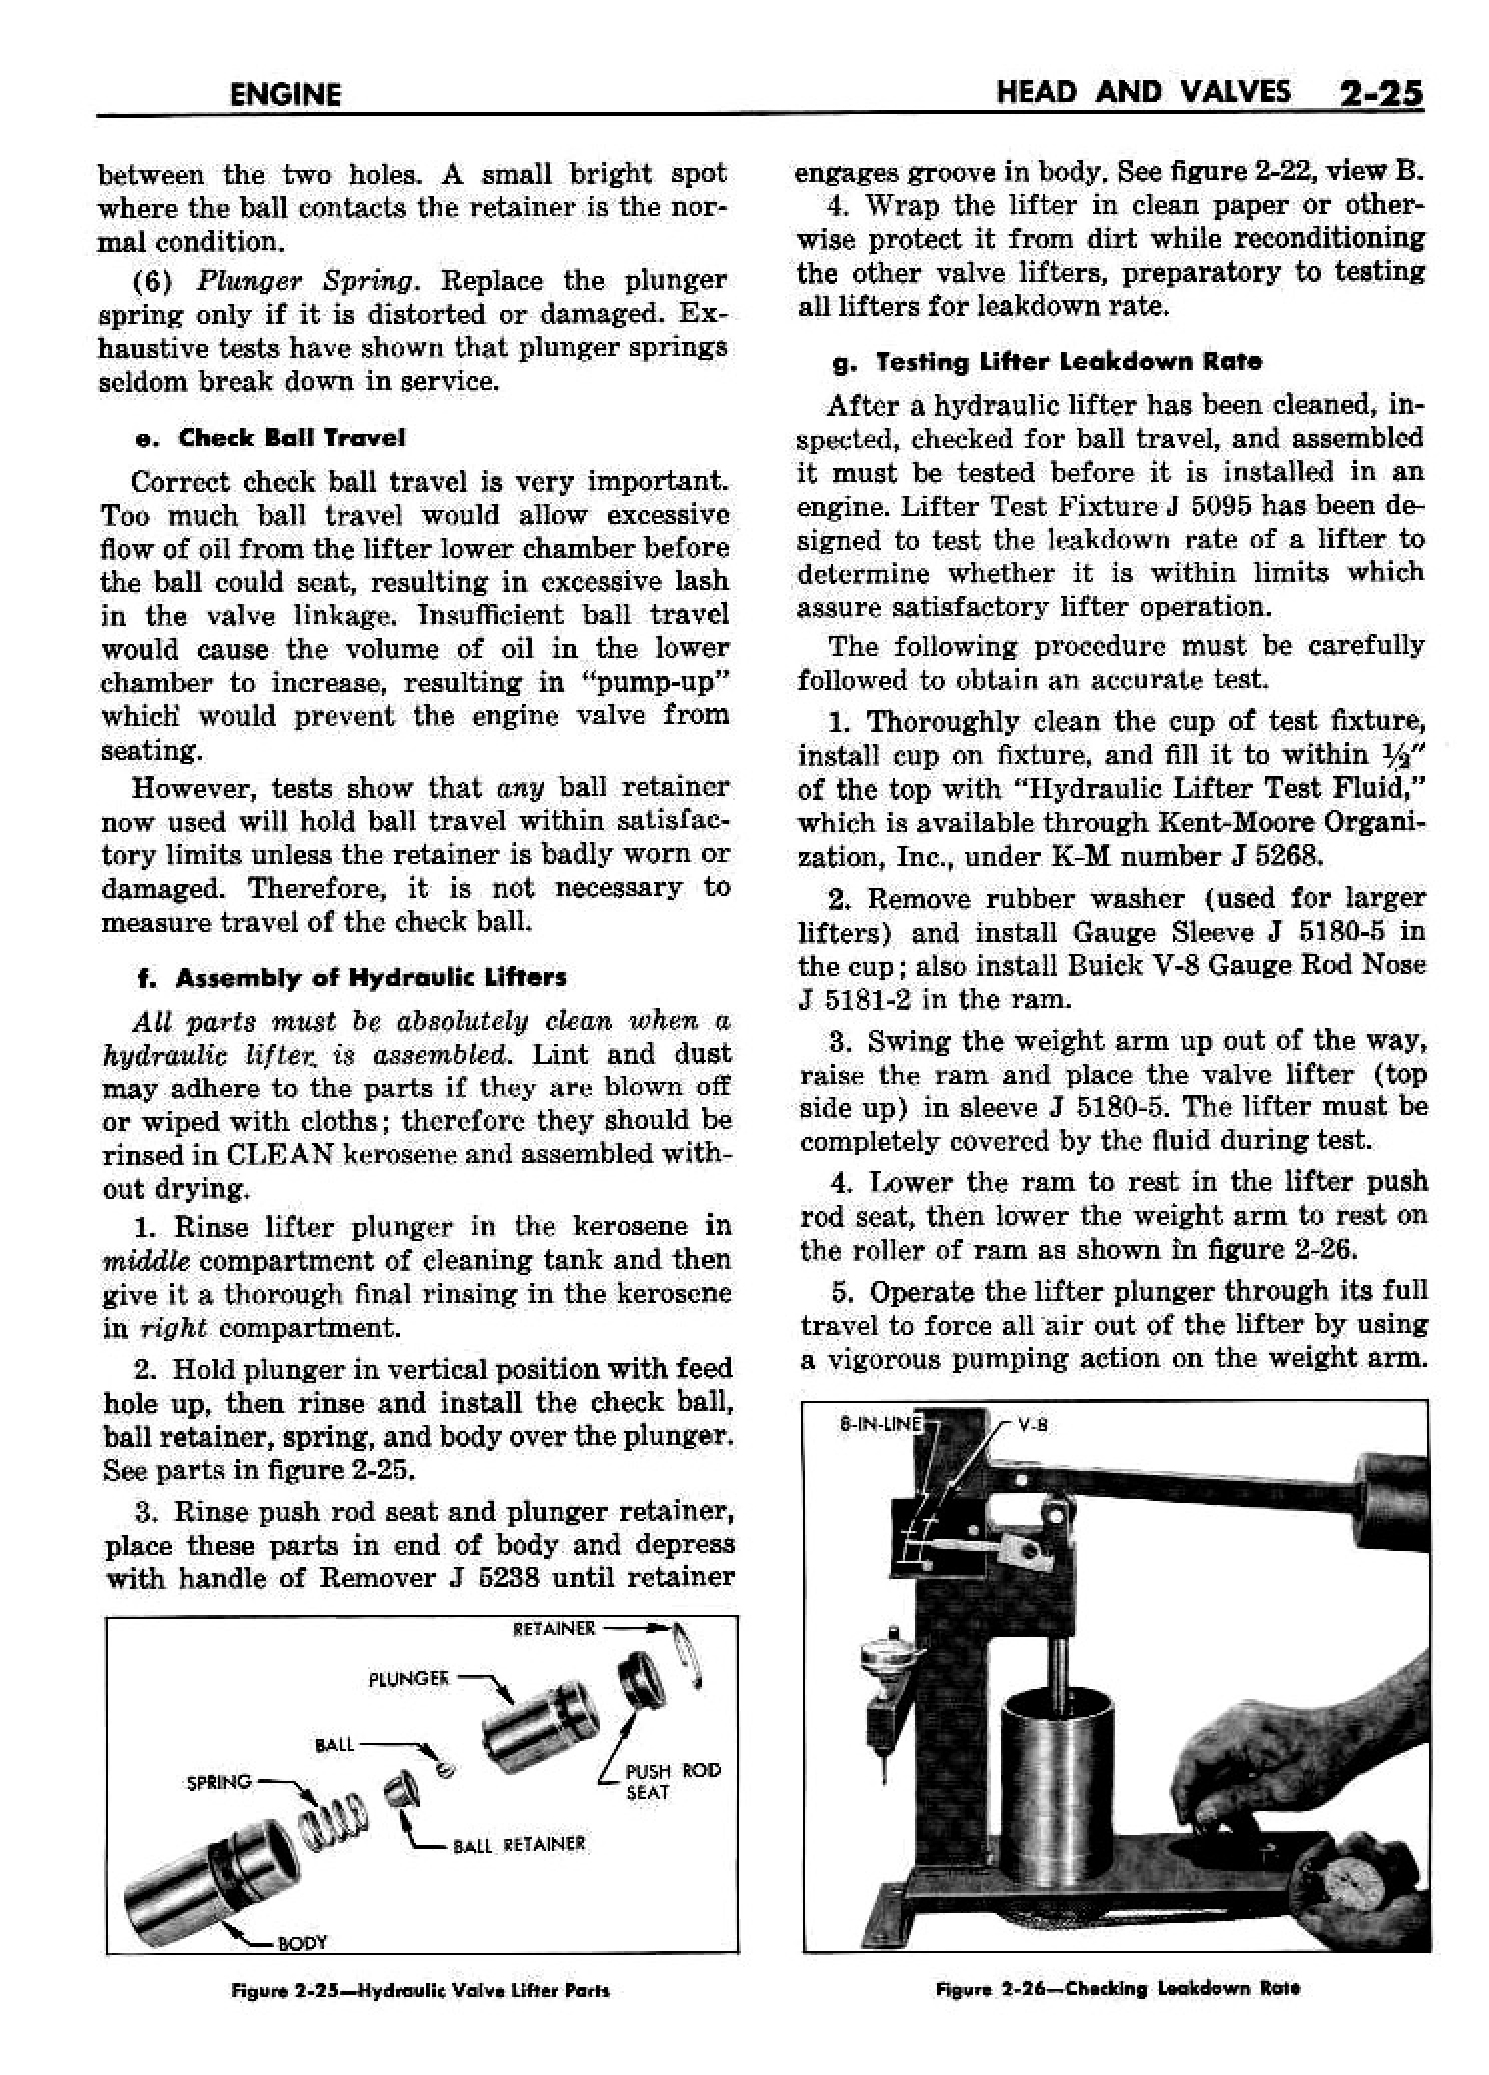 n_03 1958 Buick Shop Manual - Engine_25.jpg